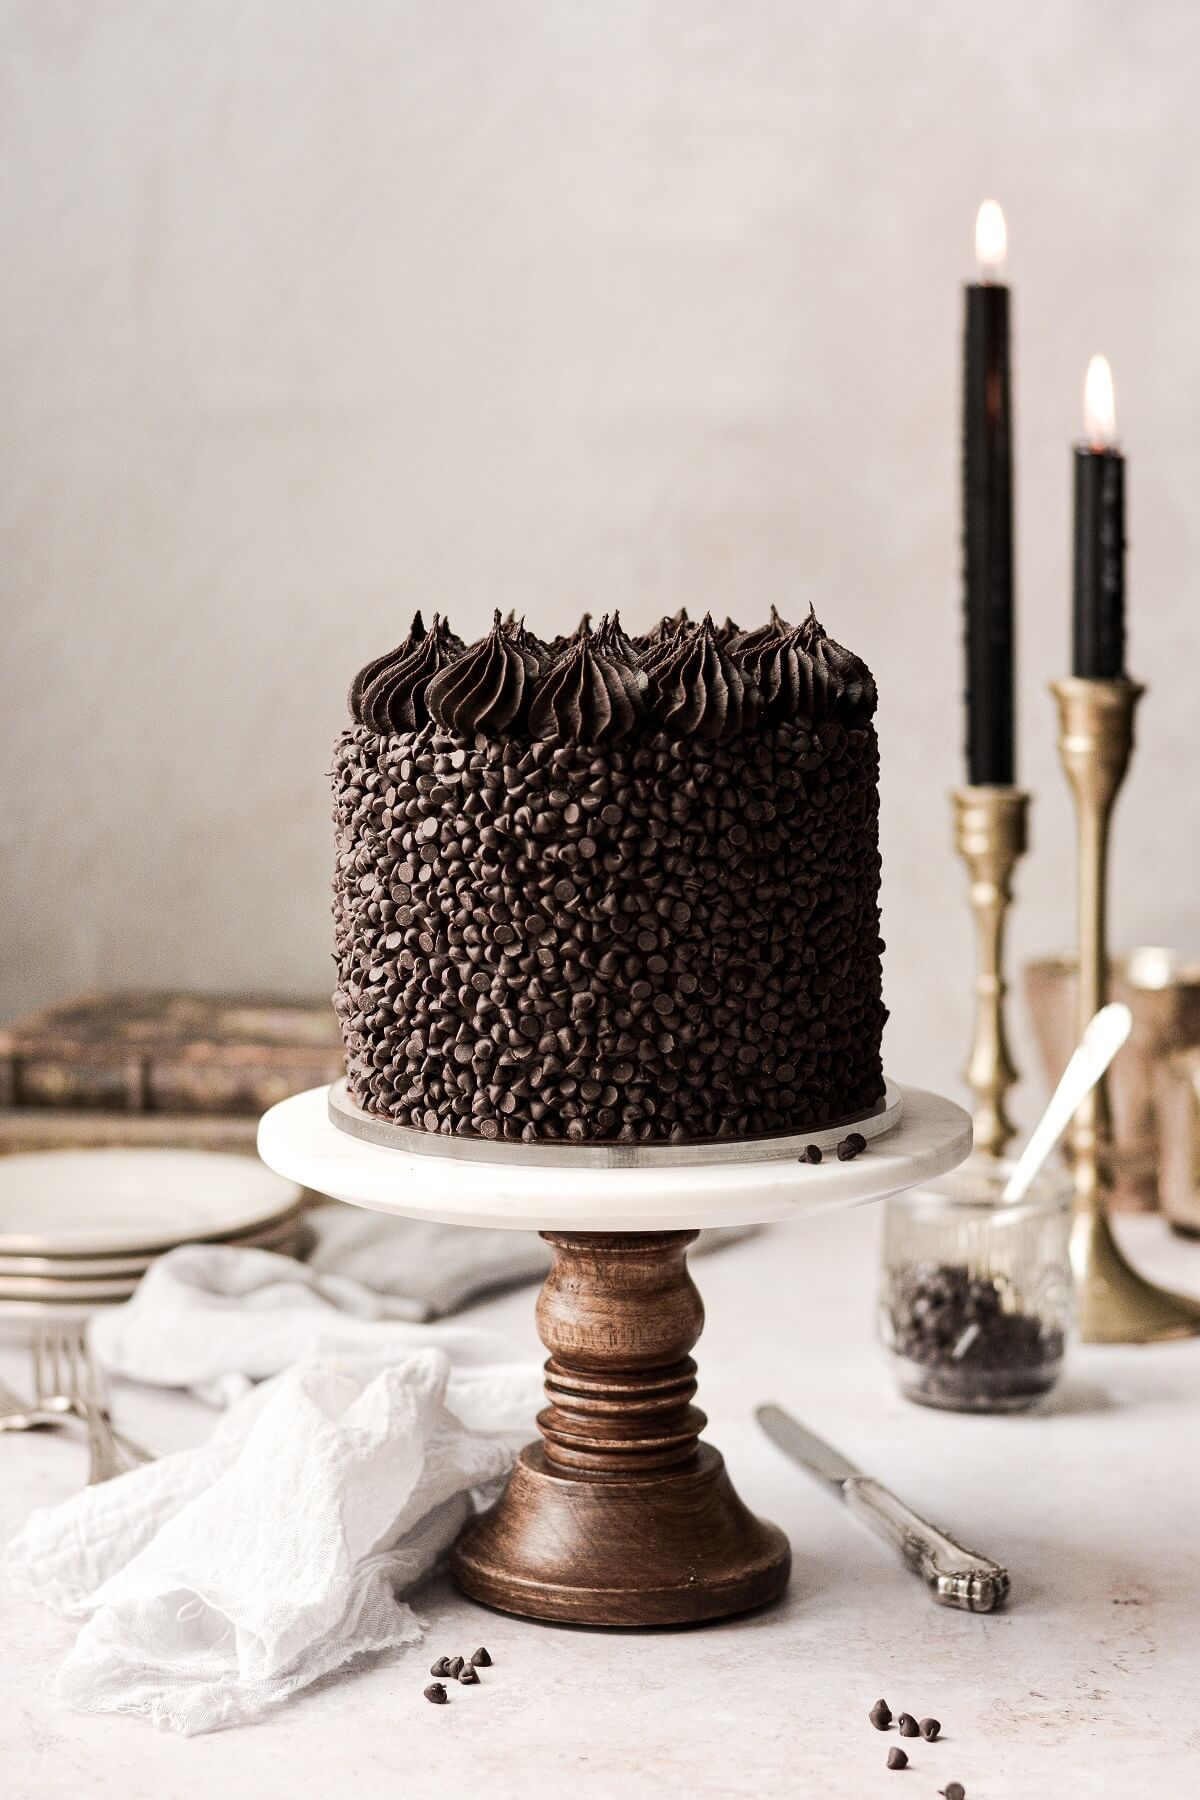 Chocolate Truffle Cake - aka Flourless Chocolate Cake -